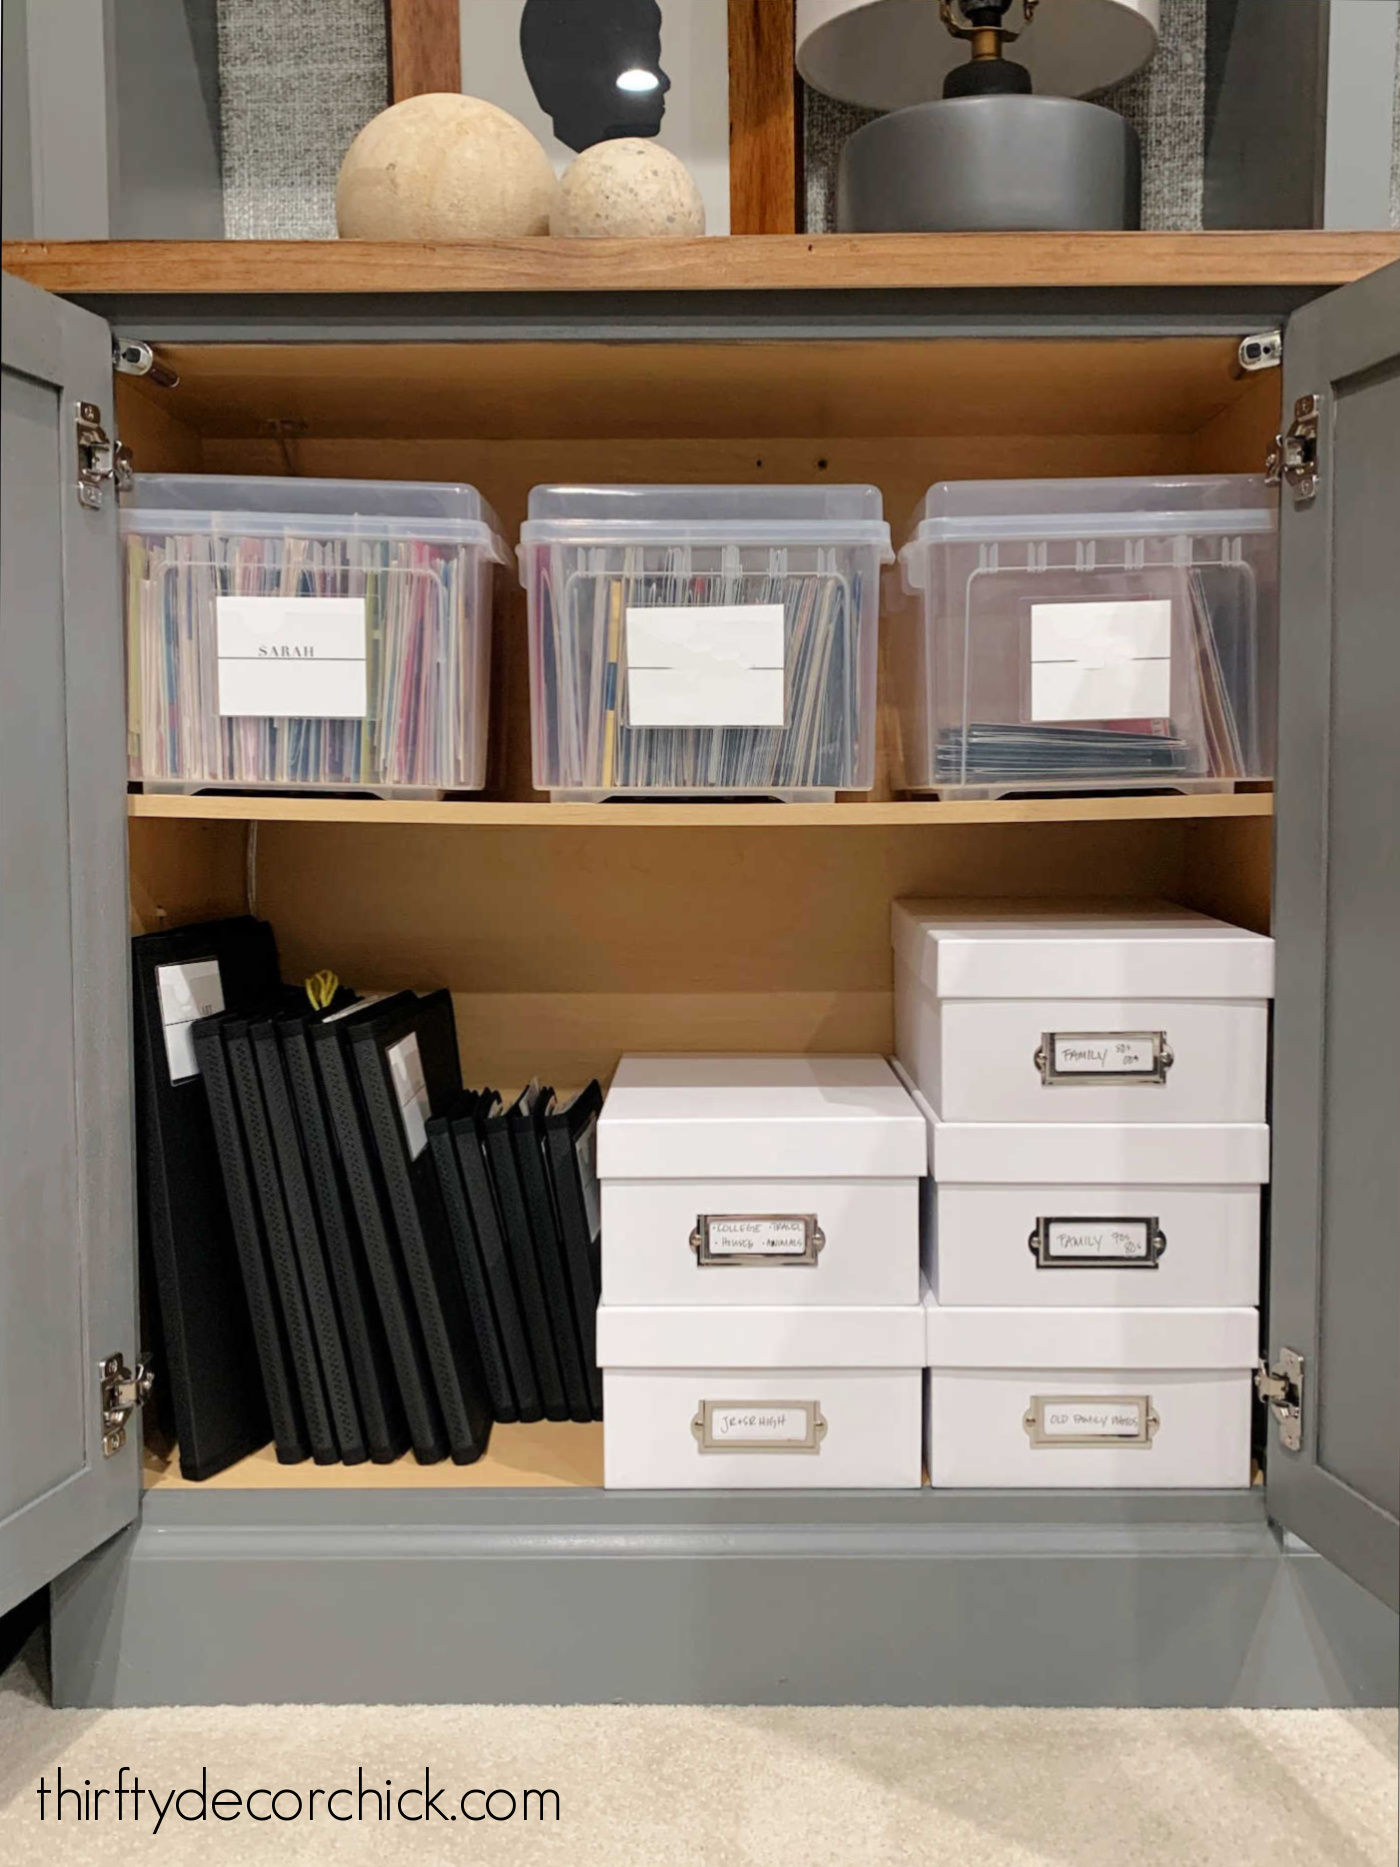 keepsake memento storage in cabinet